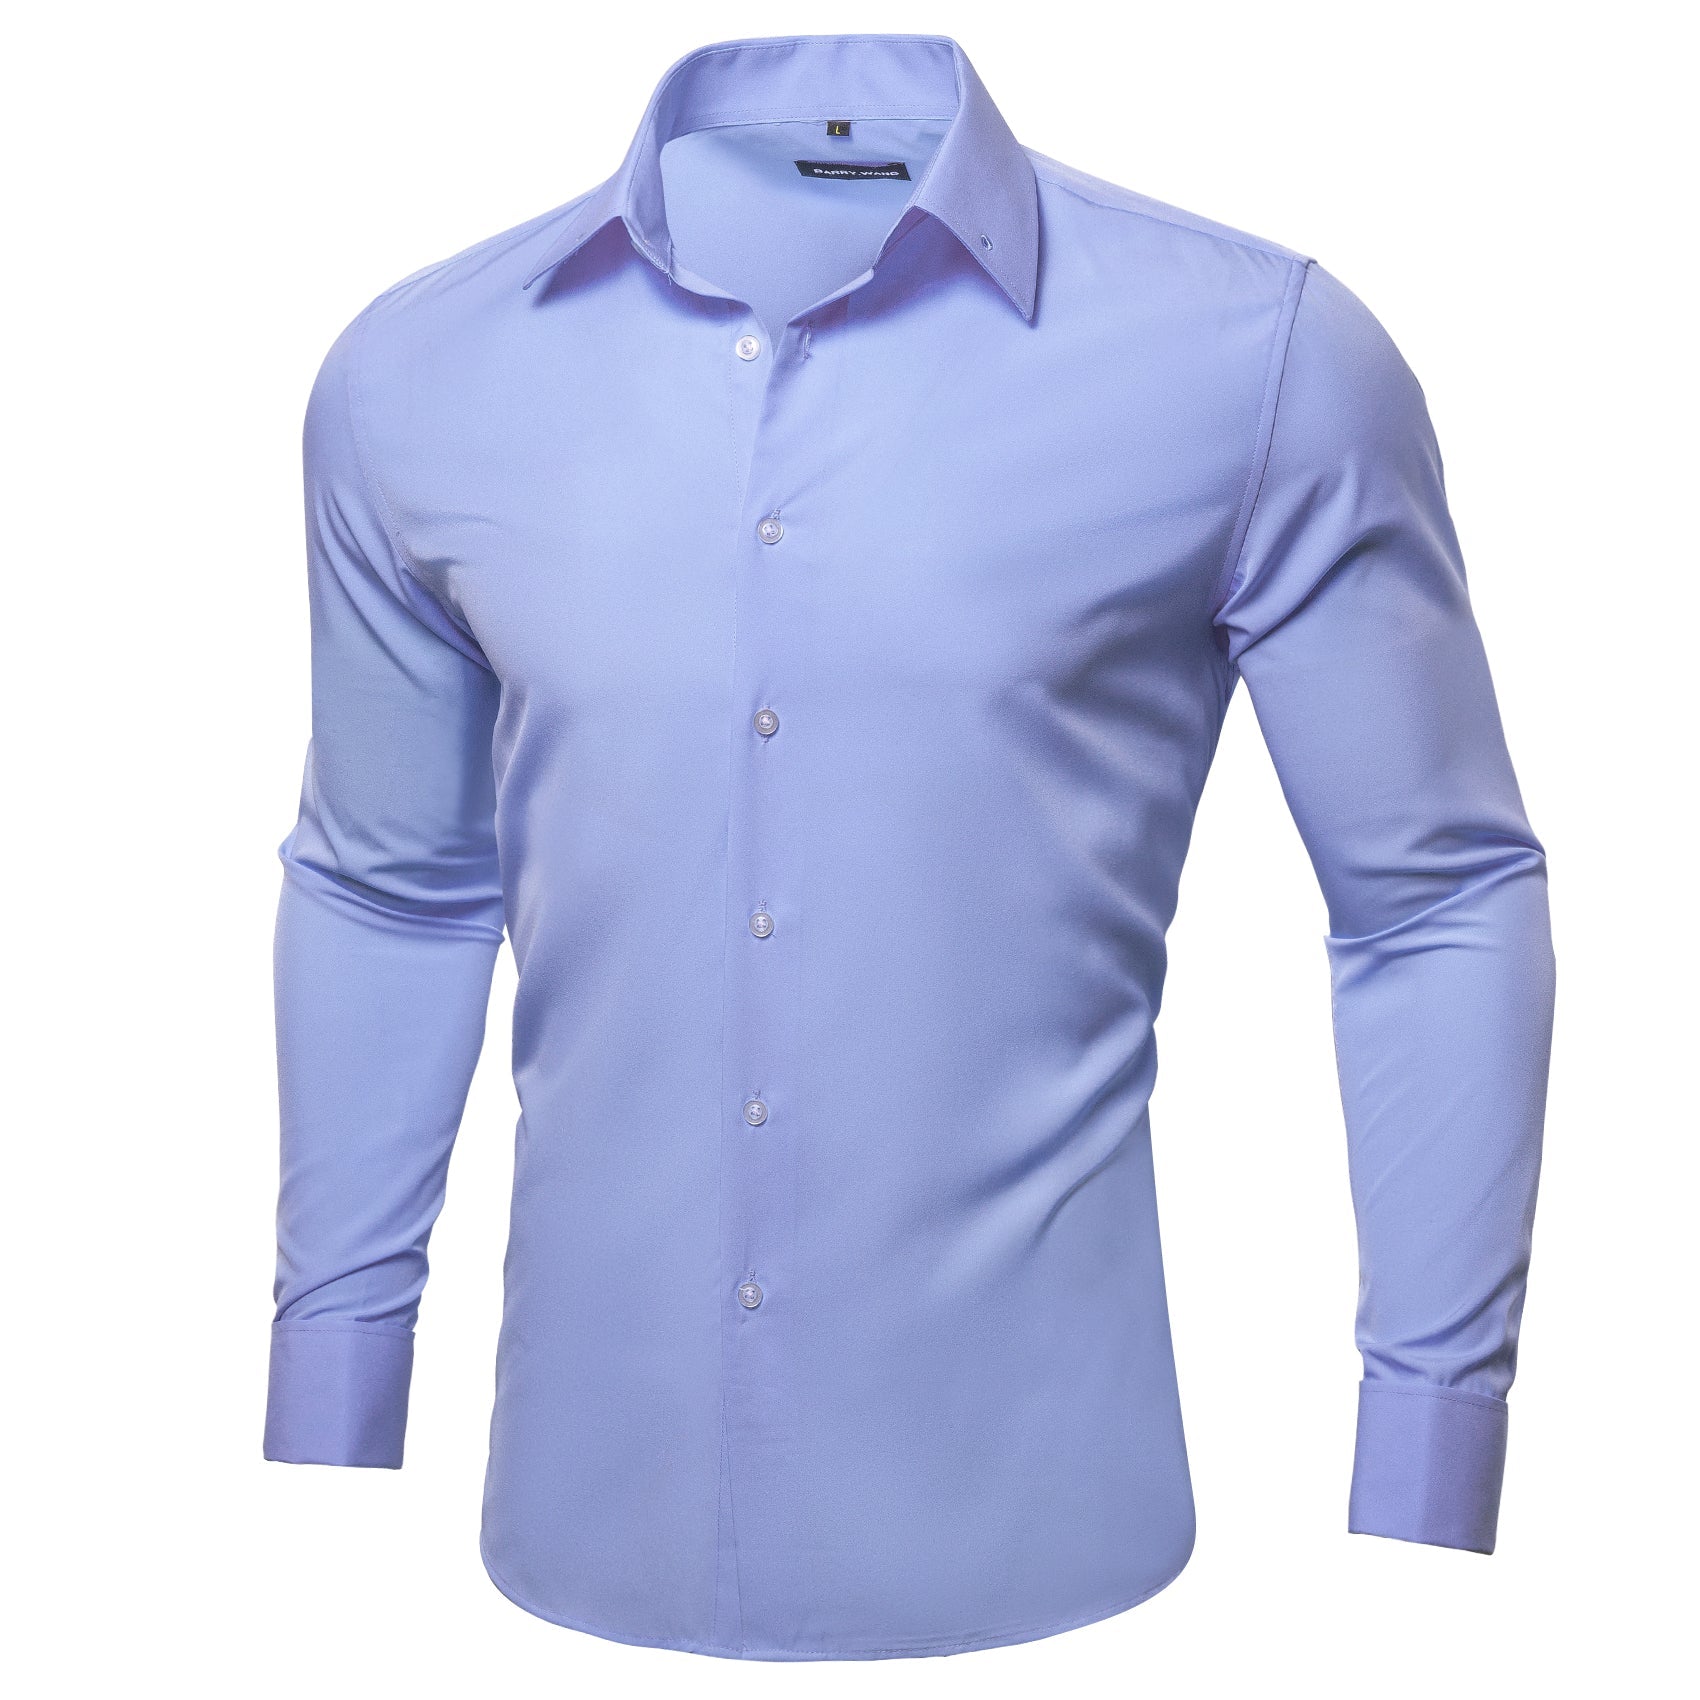 Barry.wang Medium Purple Solid Silk Shirt with Collar Pin